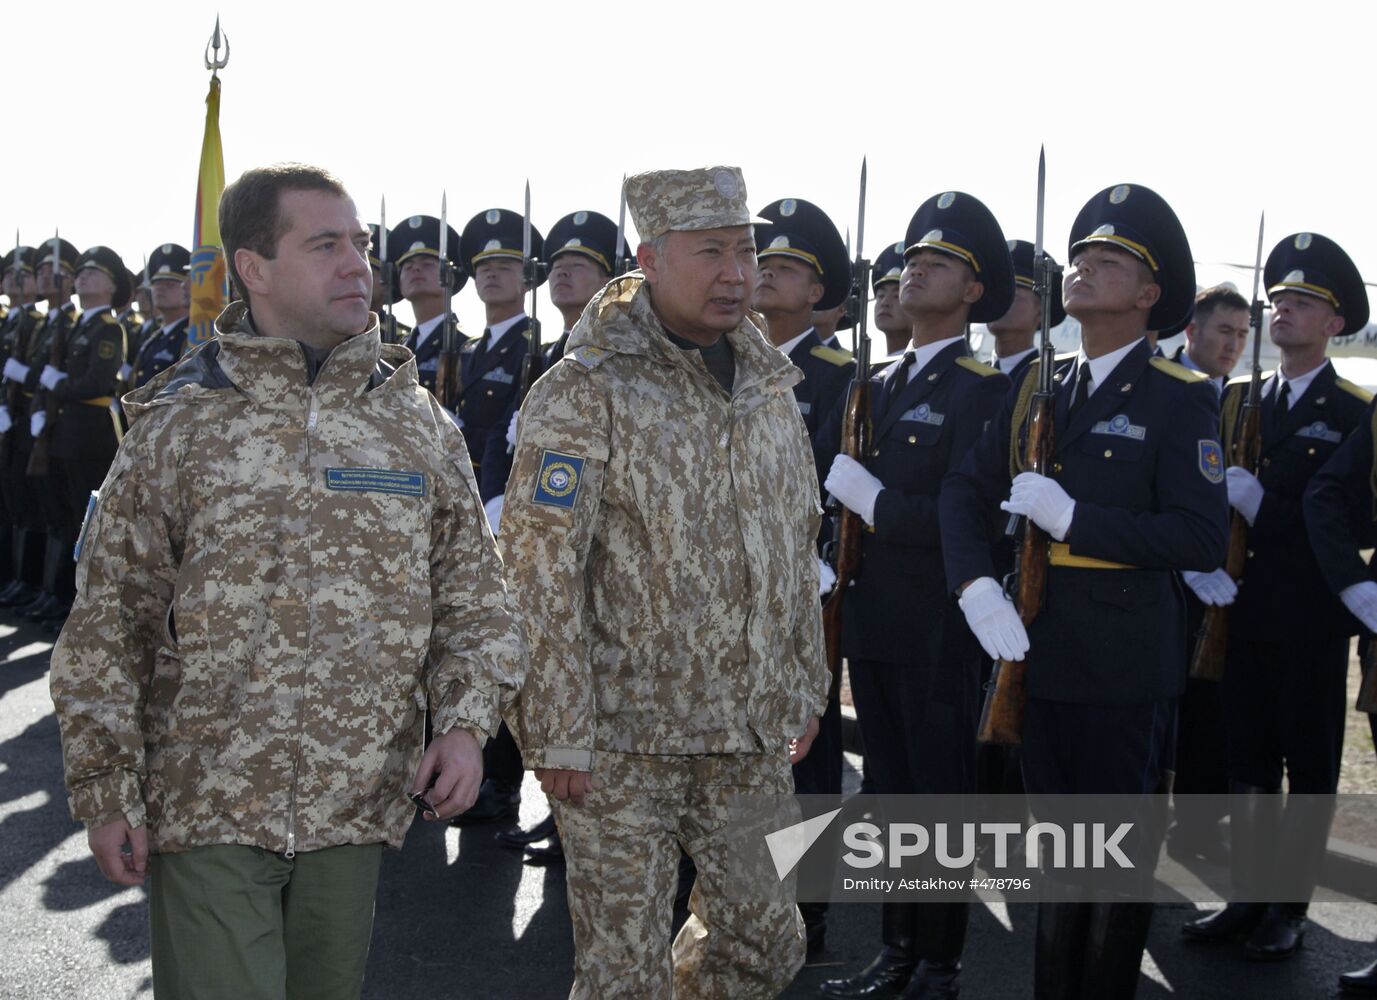 Dmitry Medvedev arriving in Kazakhstan